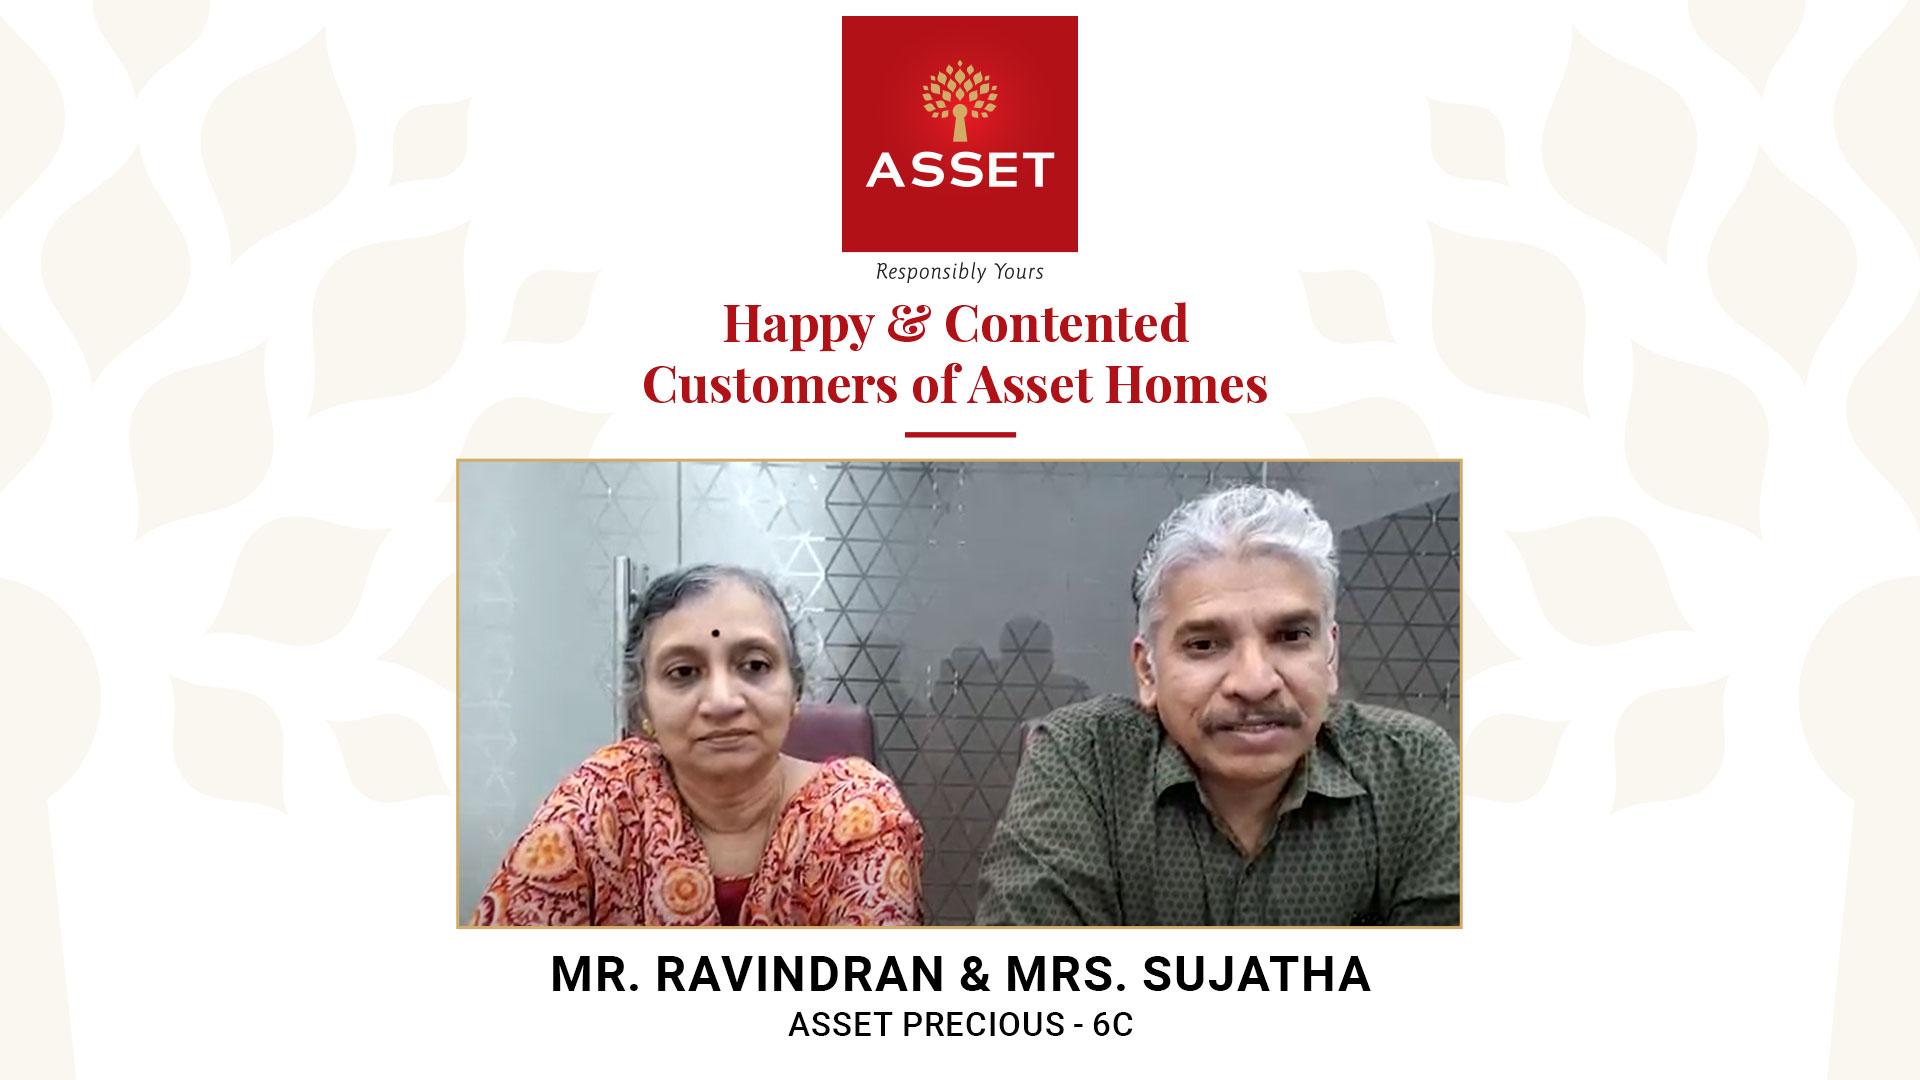 Mr. Ravindran & Mrs. Sujatha, Asset Precious 6C